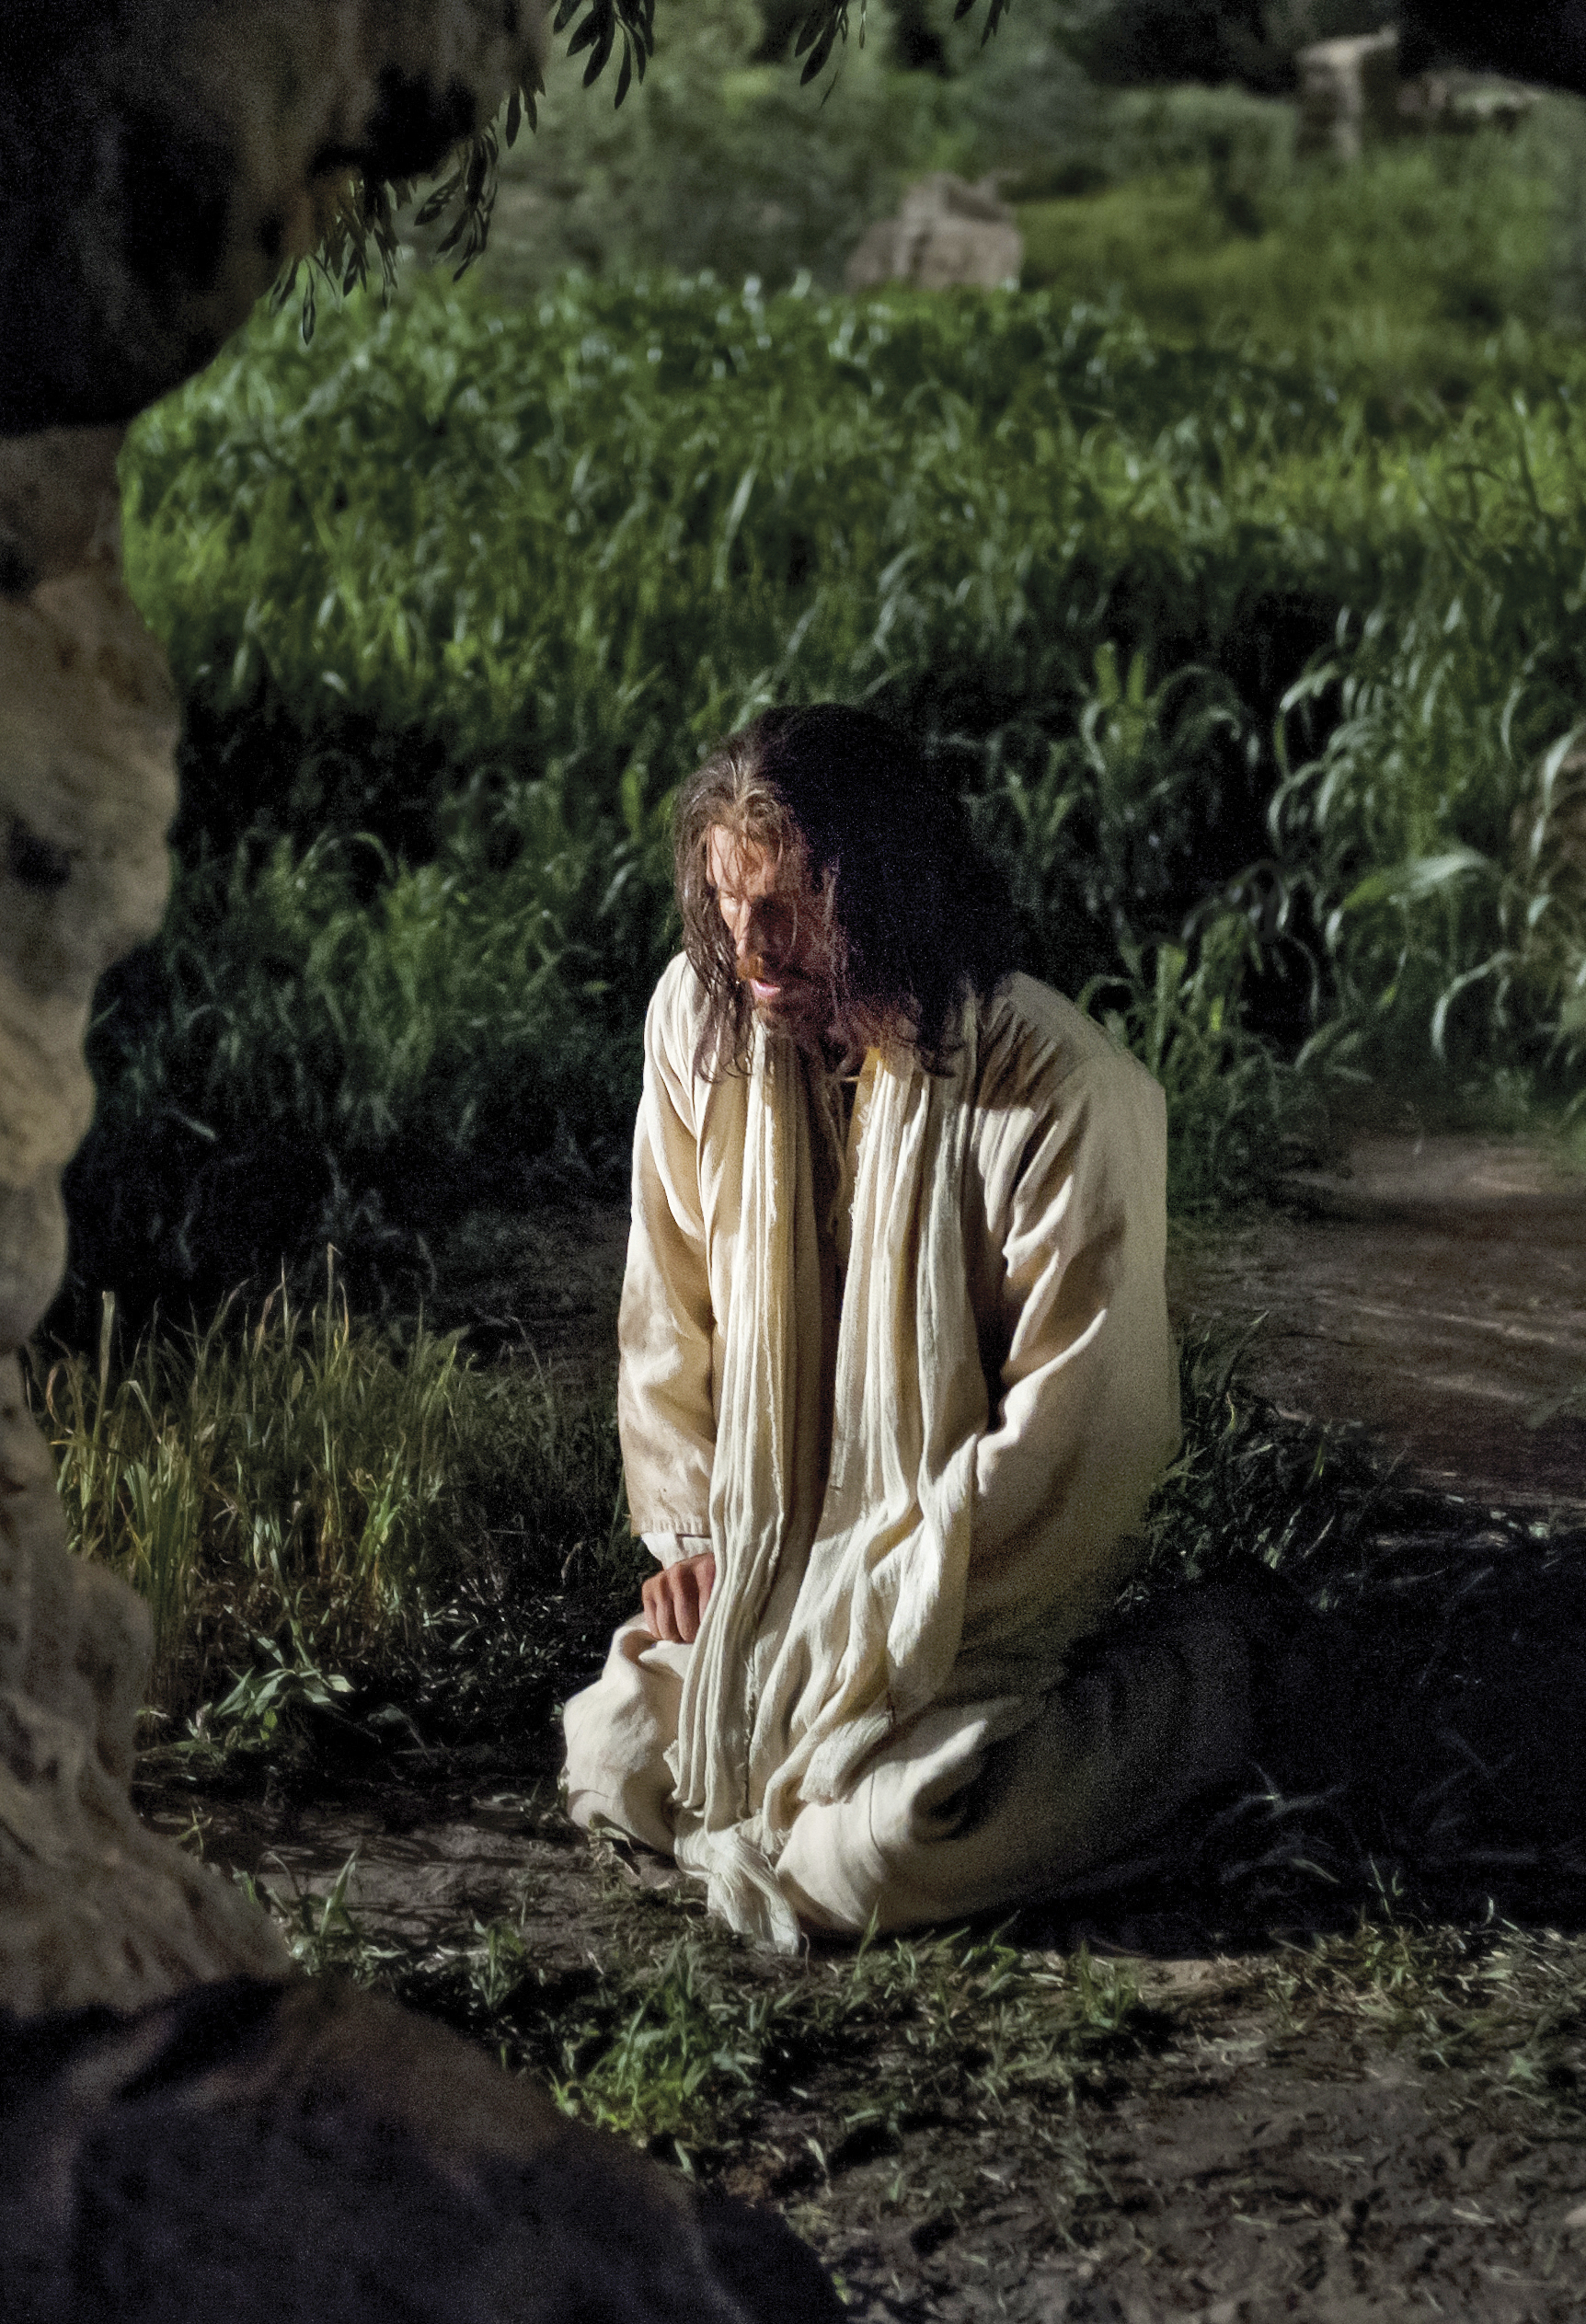 jesus christ praying in the garden of gethsemane